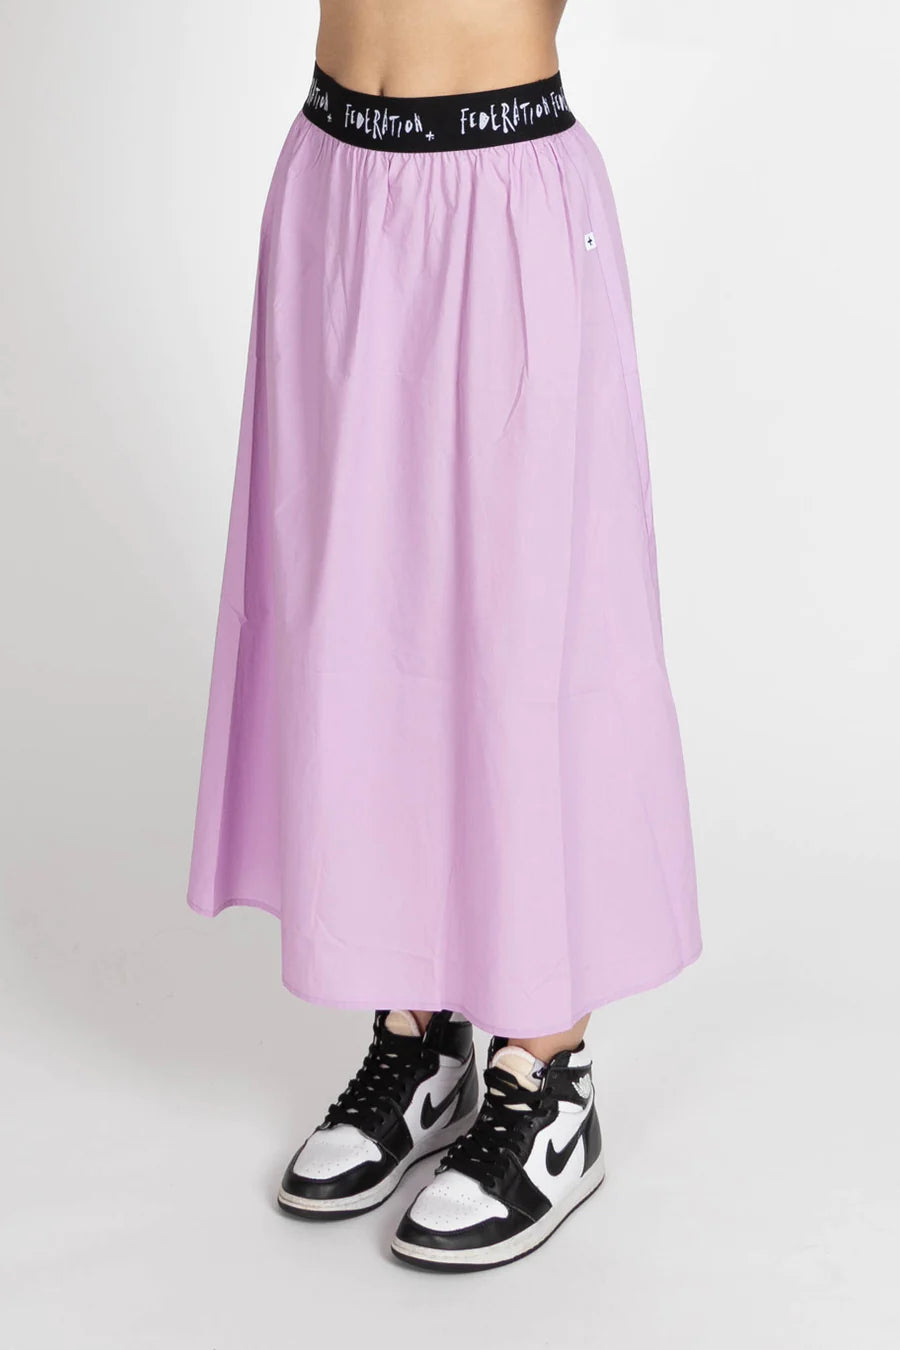 Federation Florence Skirt